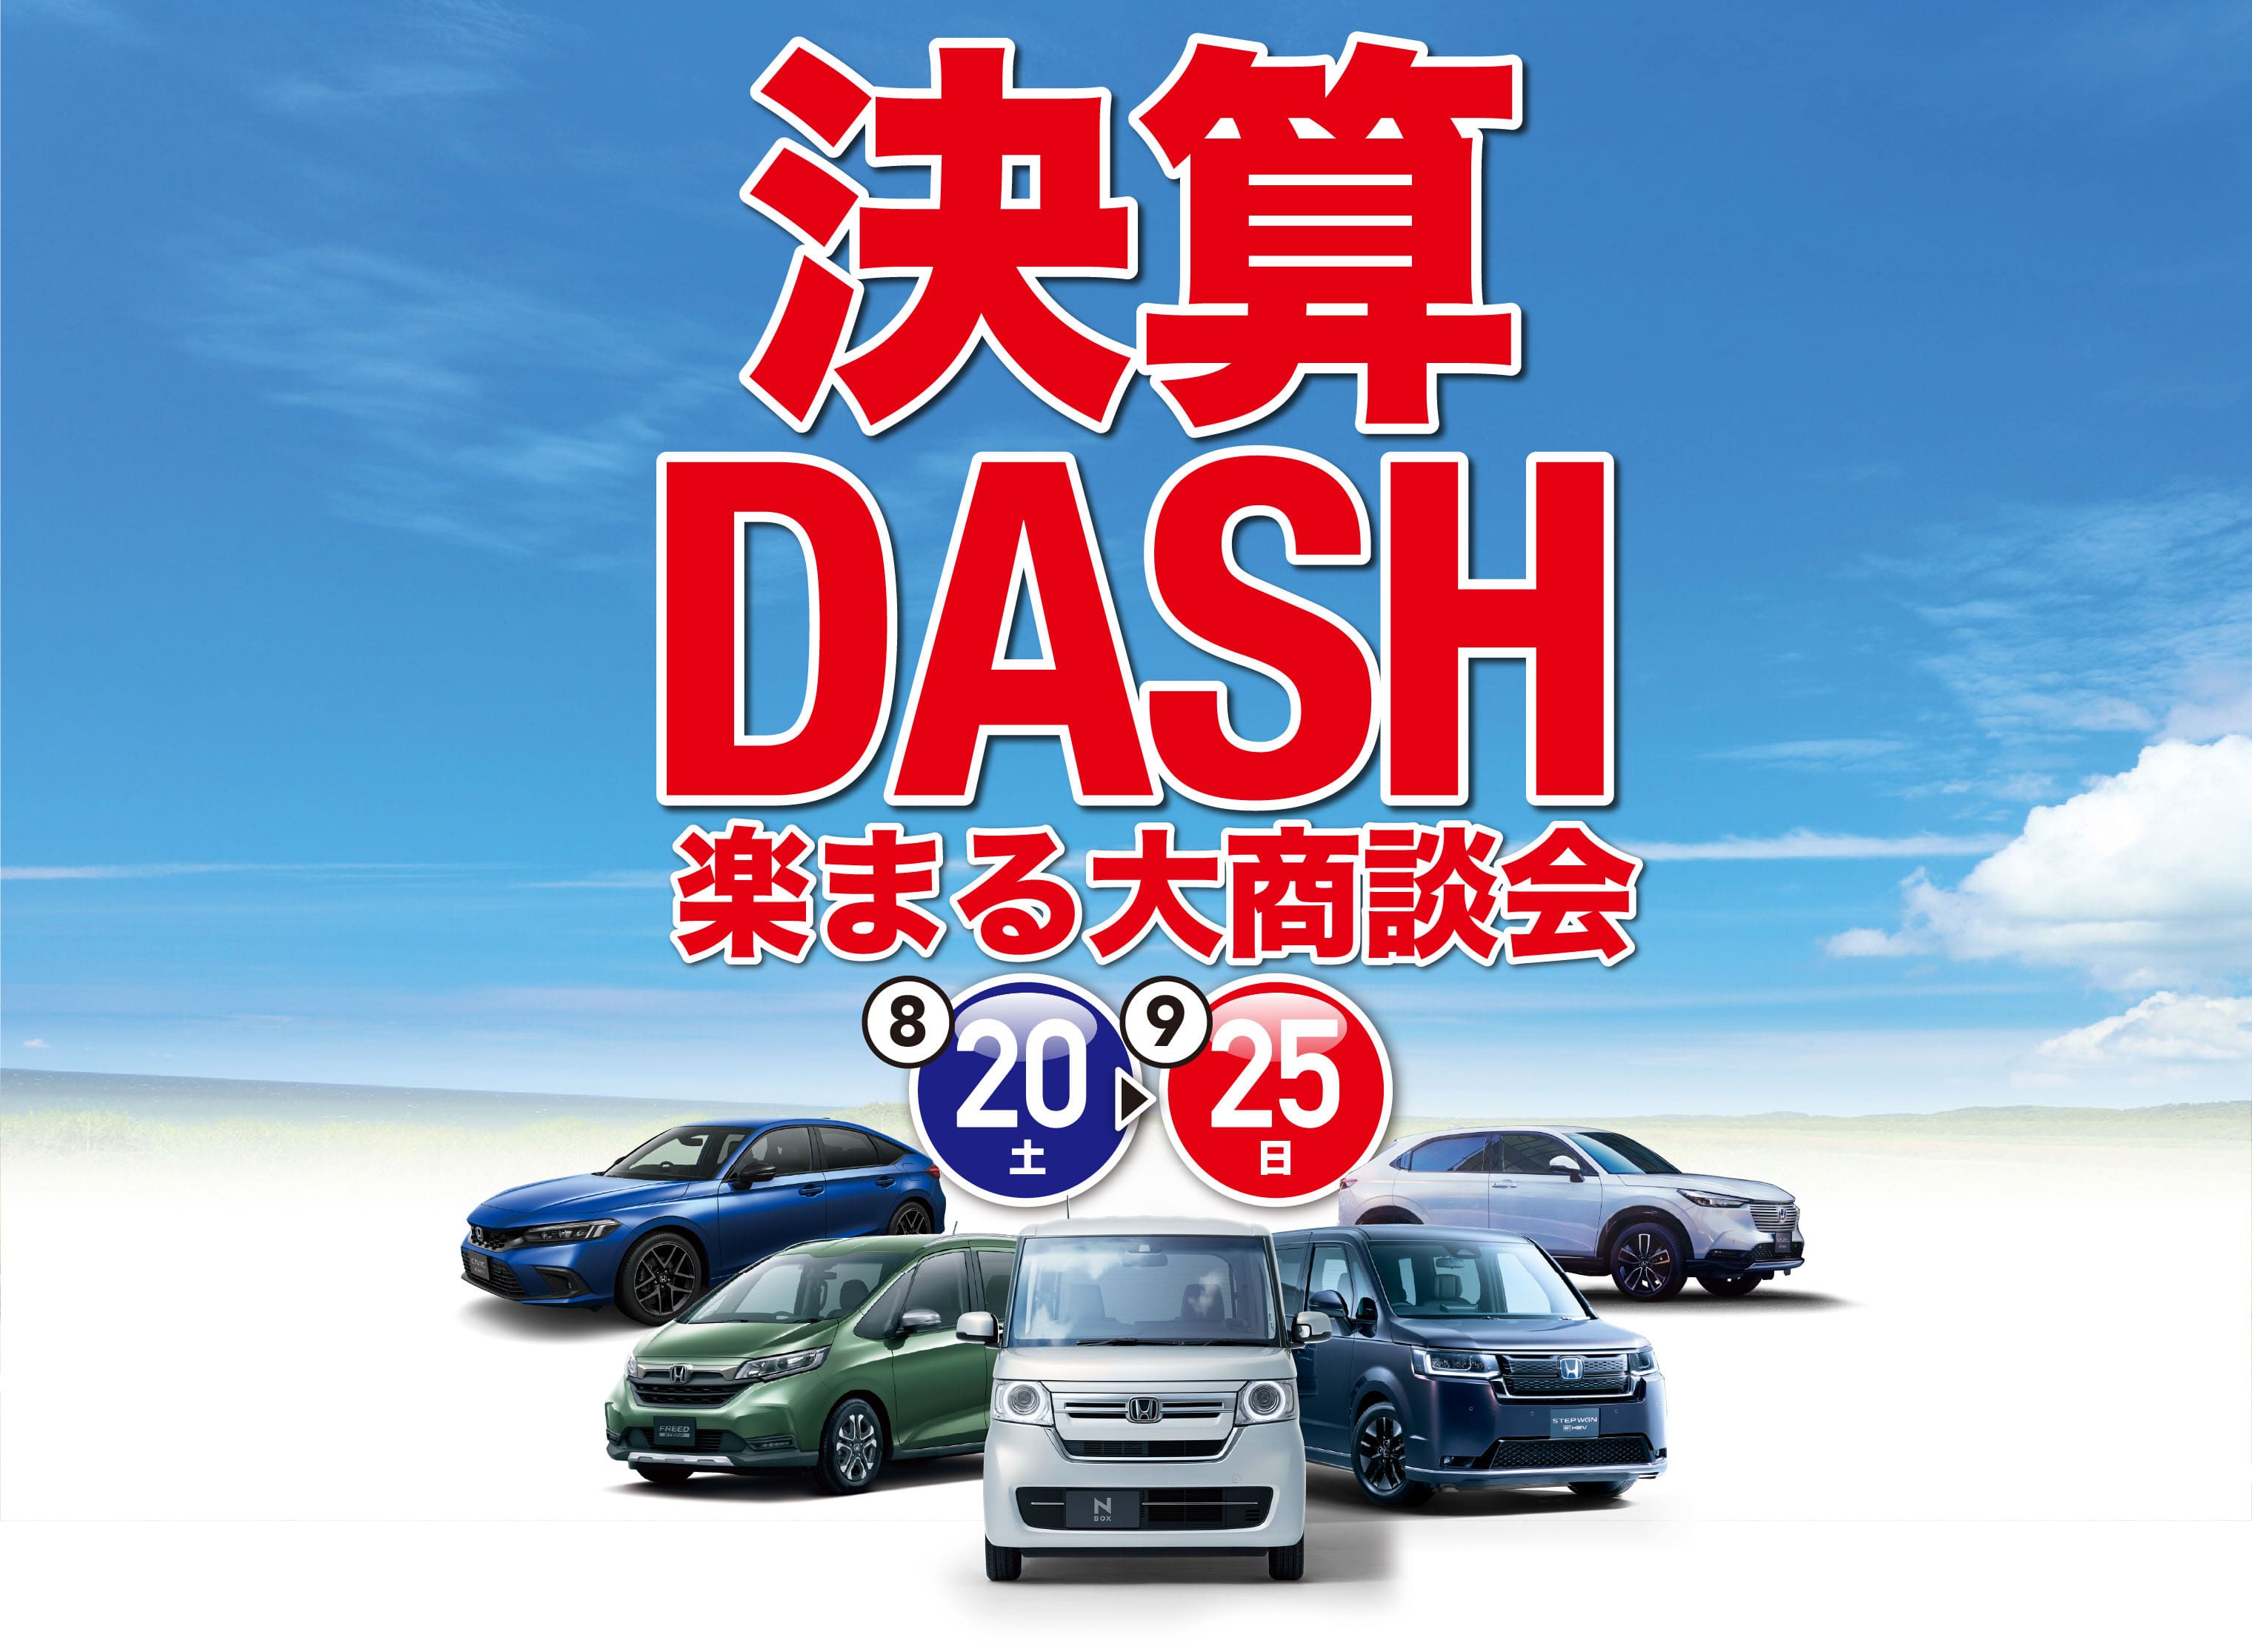 Honda Cars静岡西 決算DASH 楽まる大商談会 8.20（土）〜